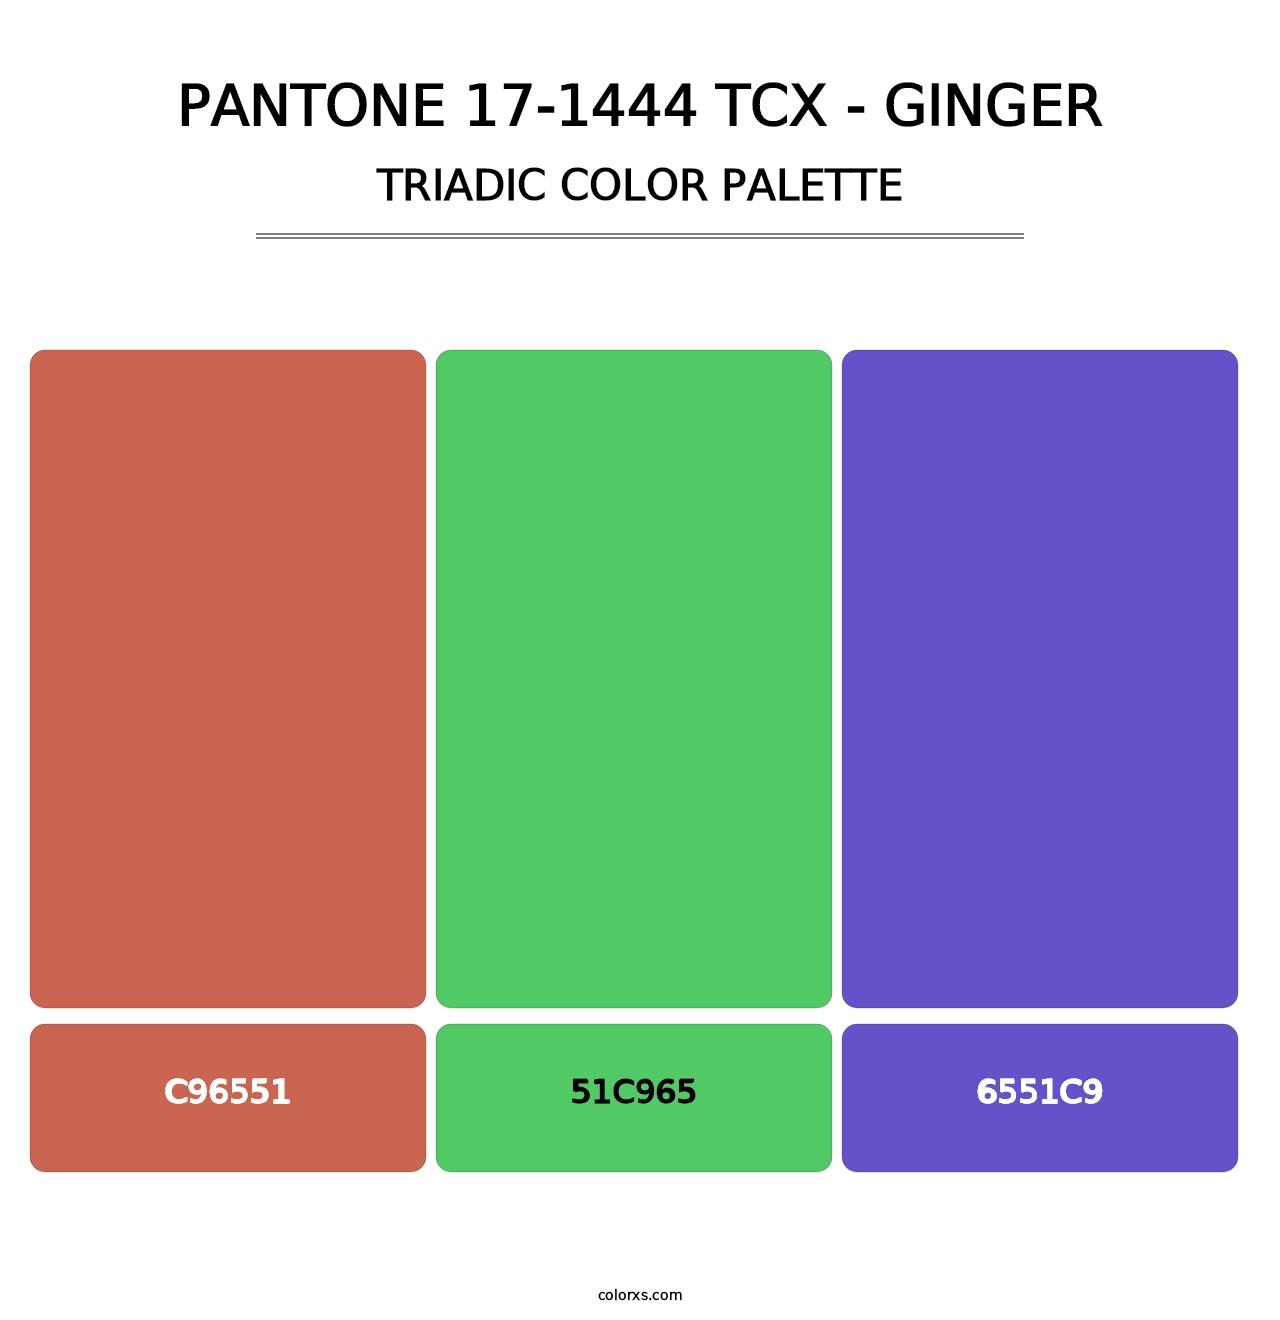 PANTONE 17-1444 TCX - Ginger - Triadic Color Palette